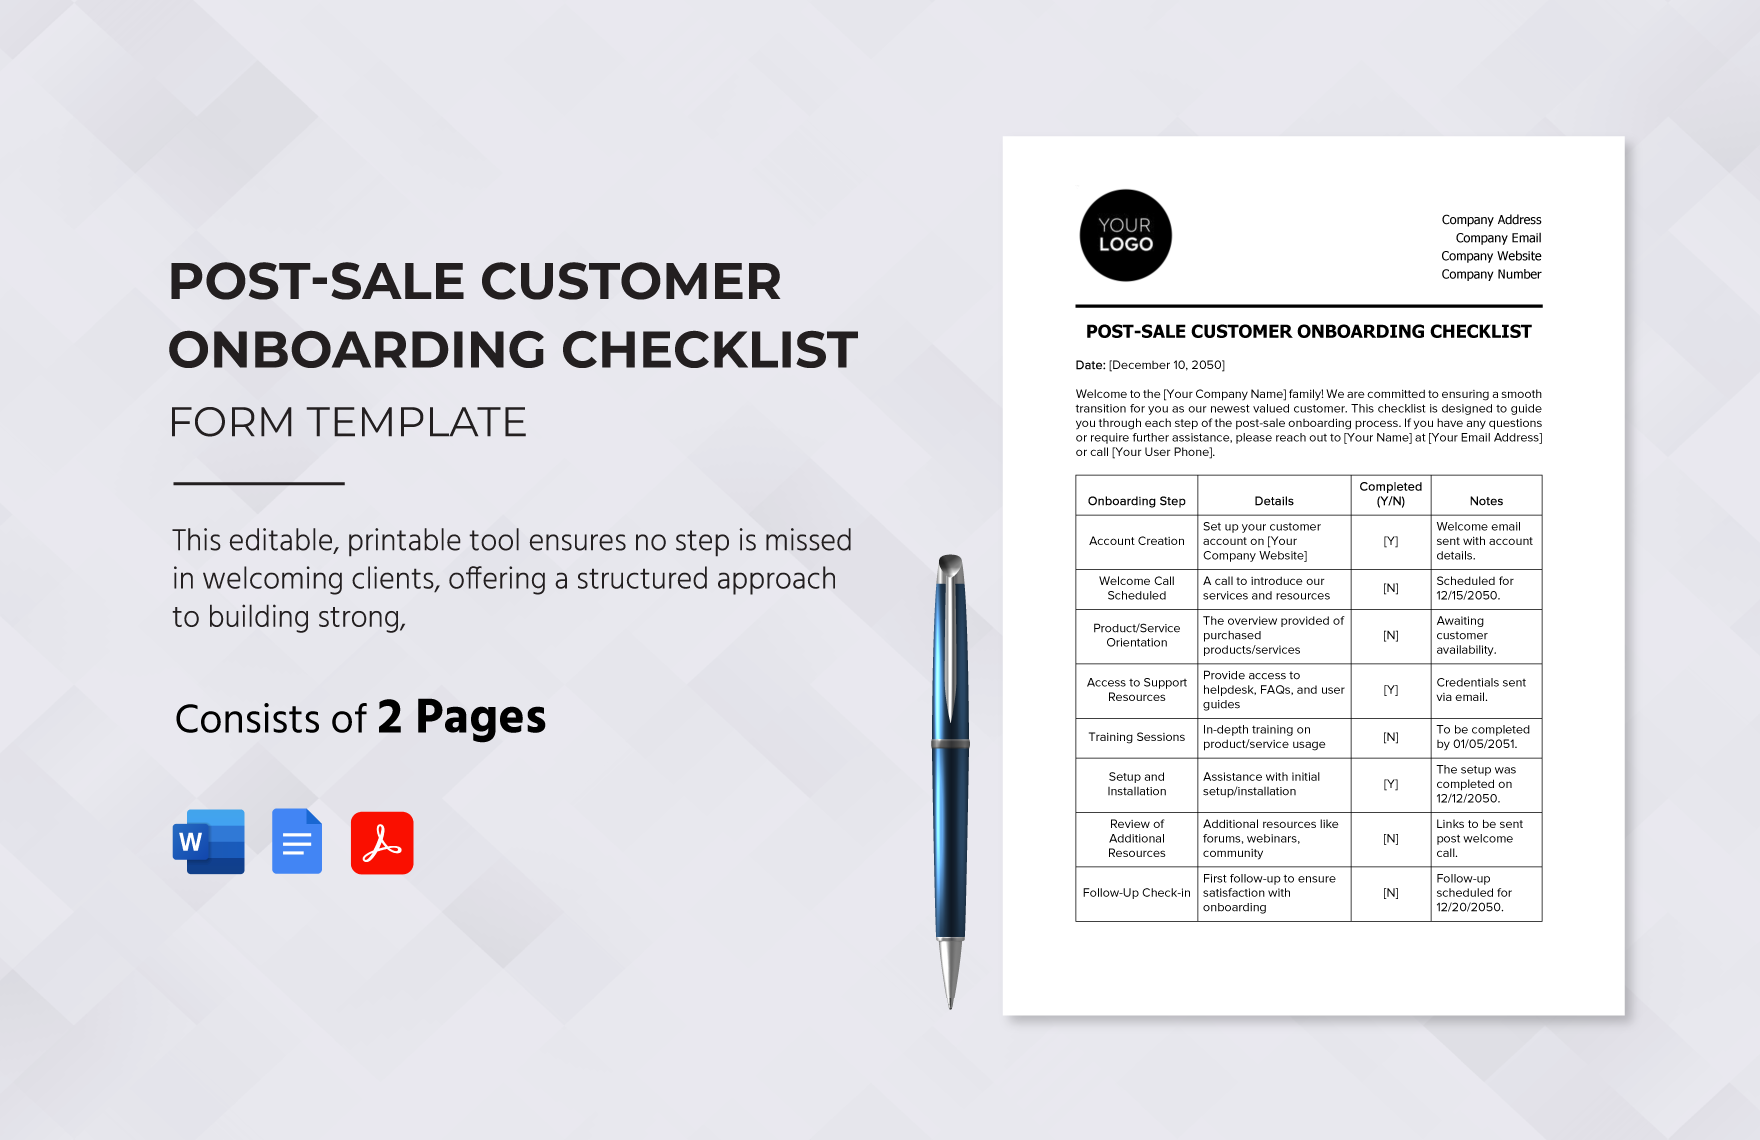 Post-Sale Customer Onboarding Checklist Template